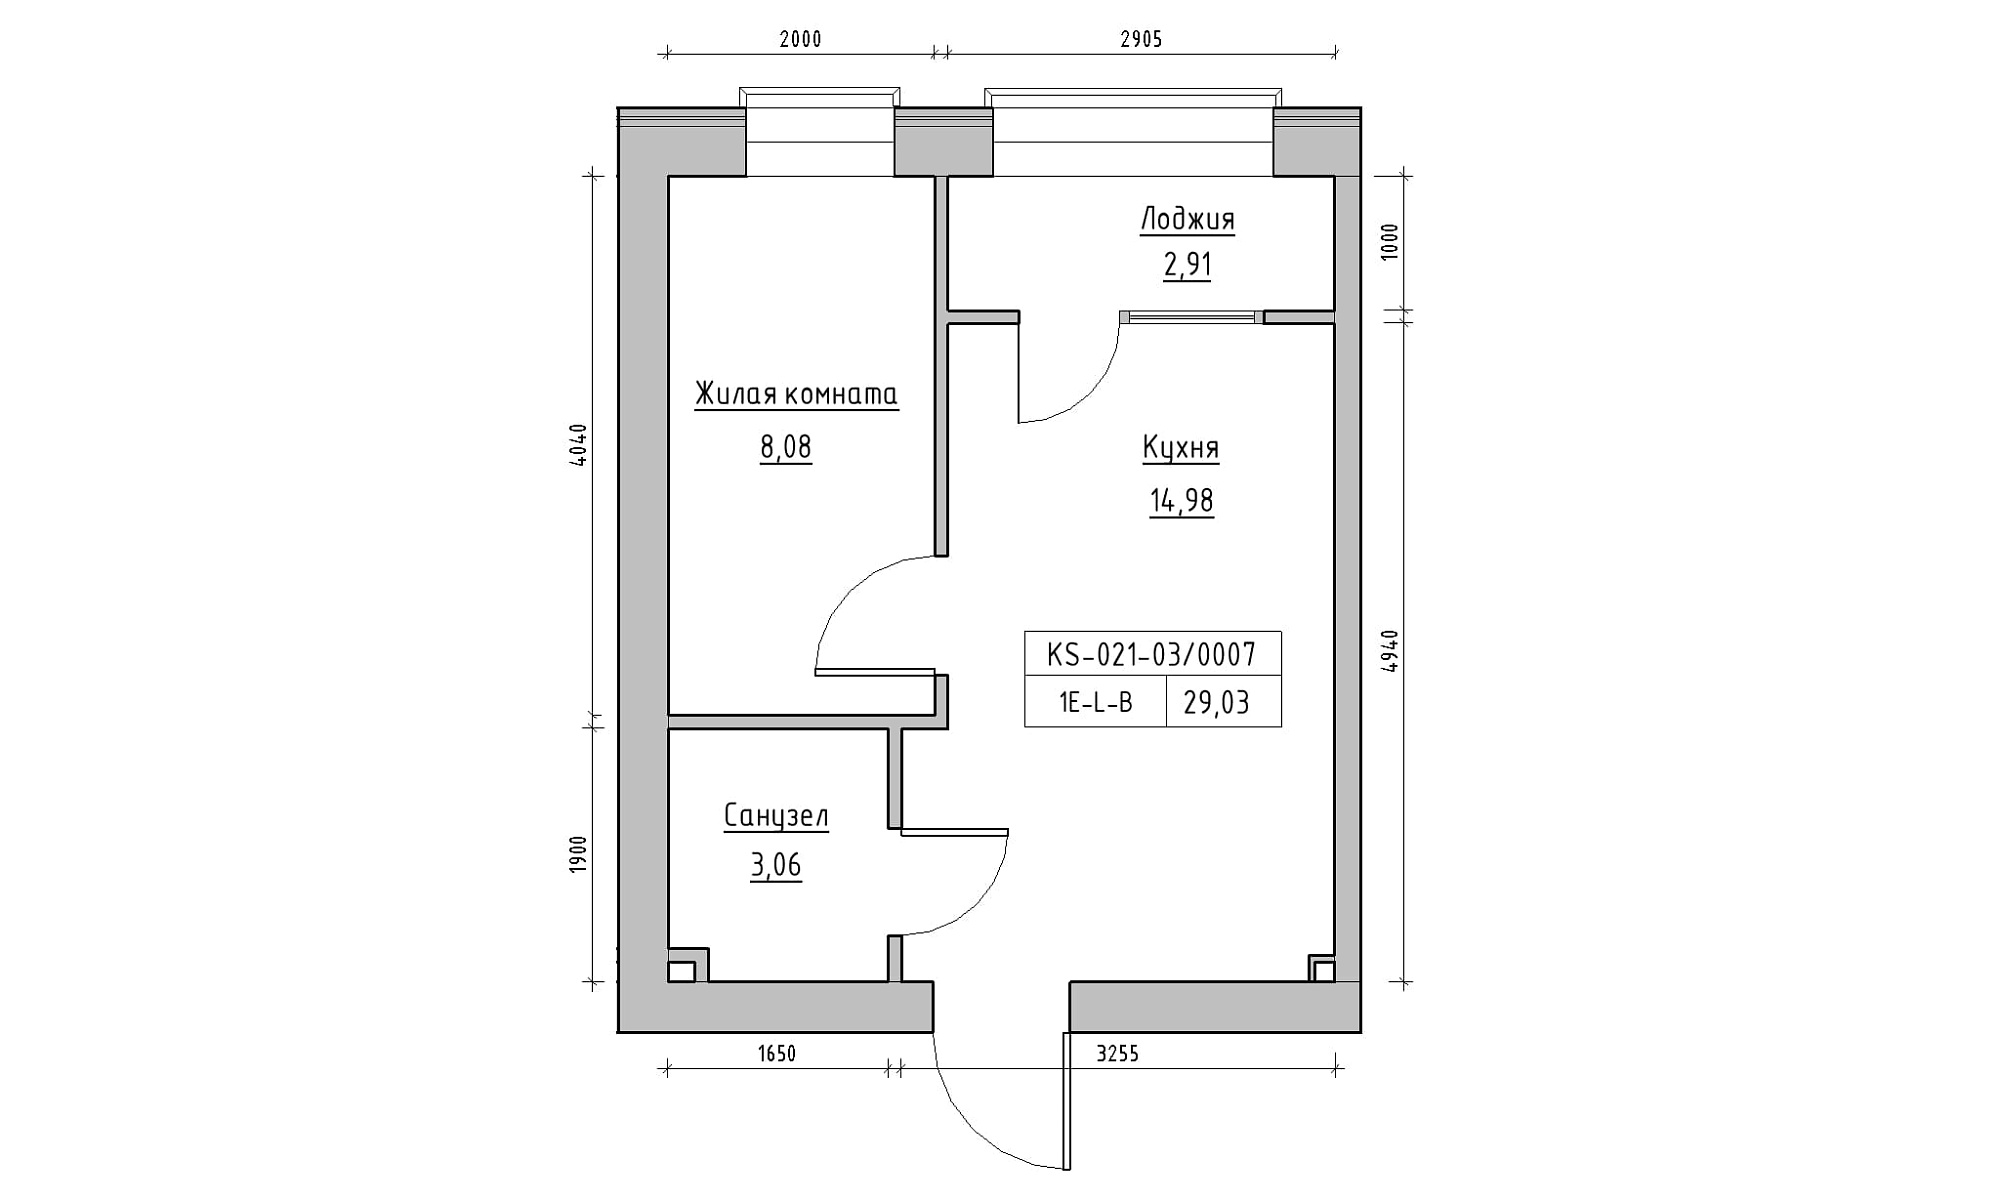 Planning 1-rm flats area 29.03m2, KS-021-03/0007.